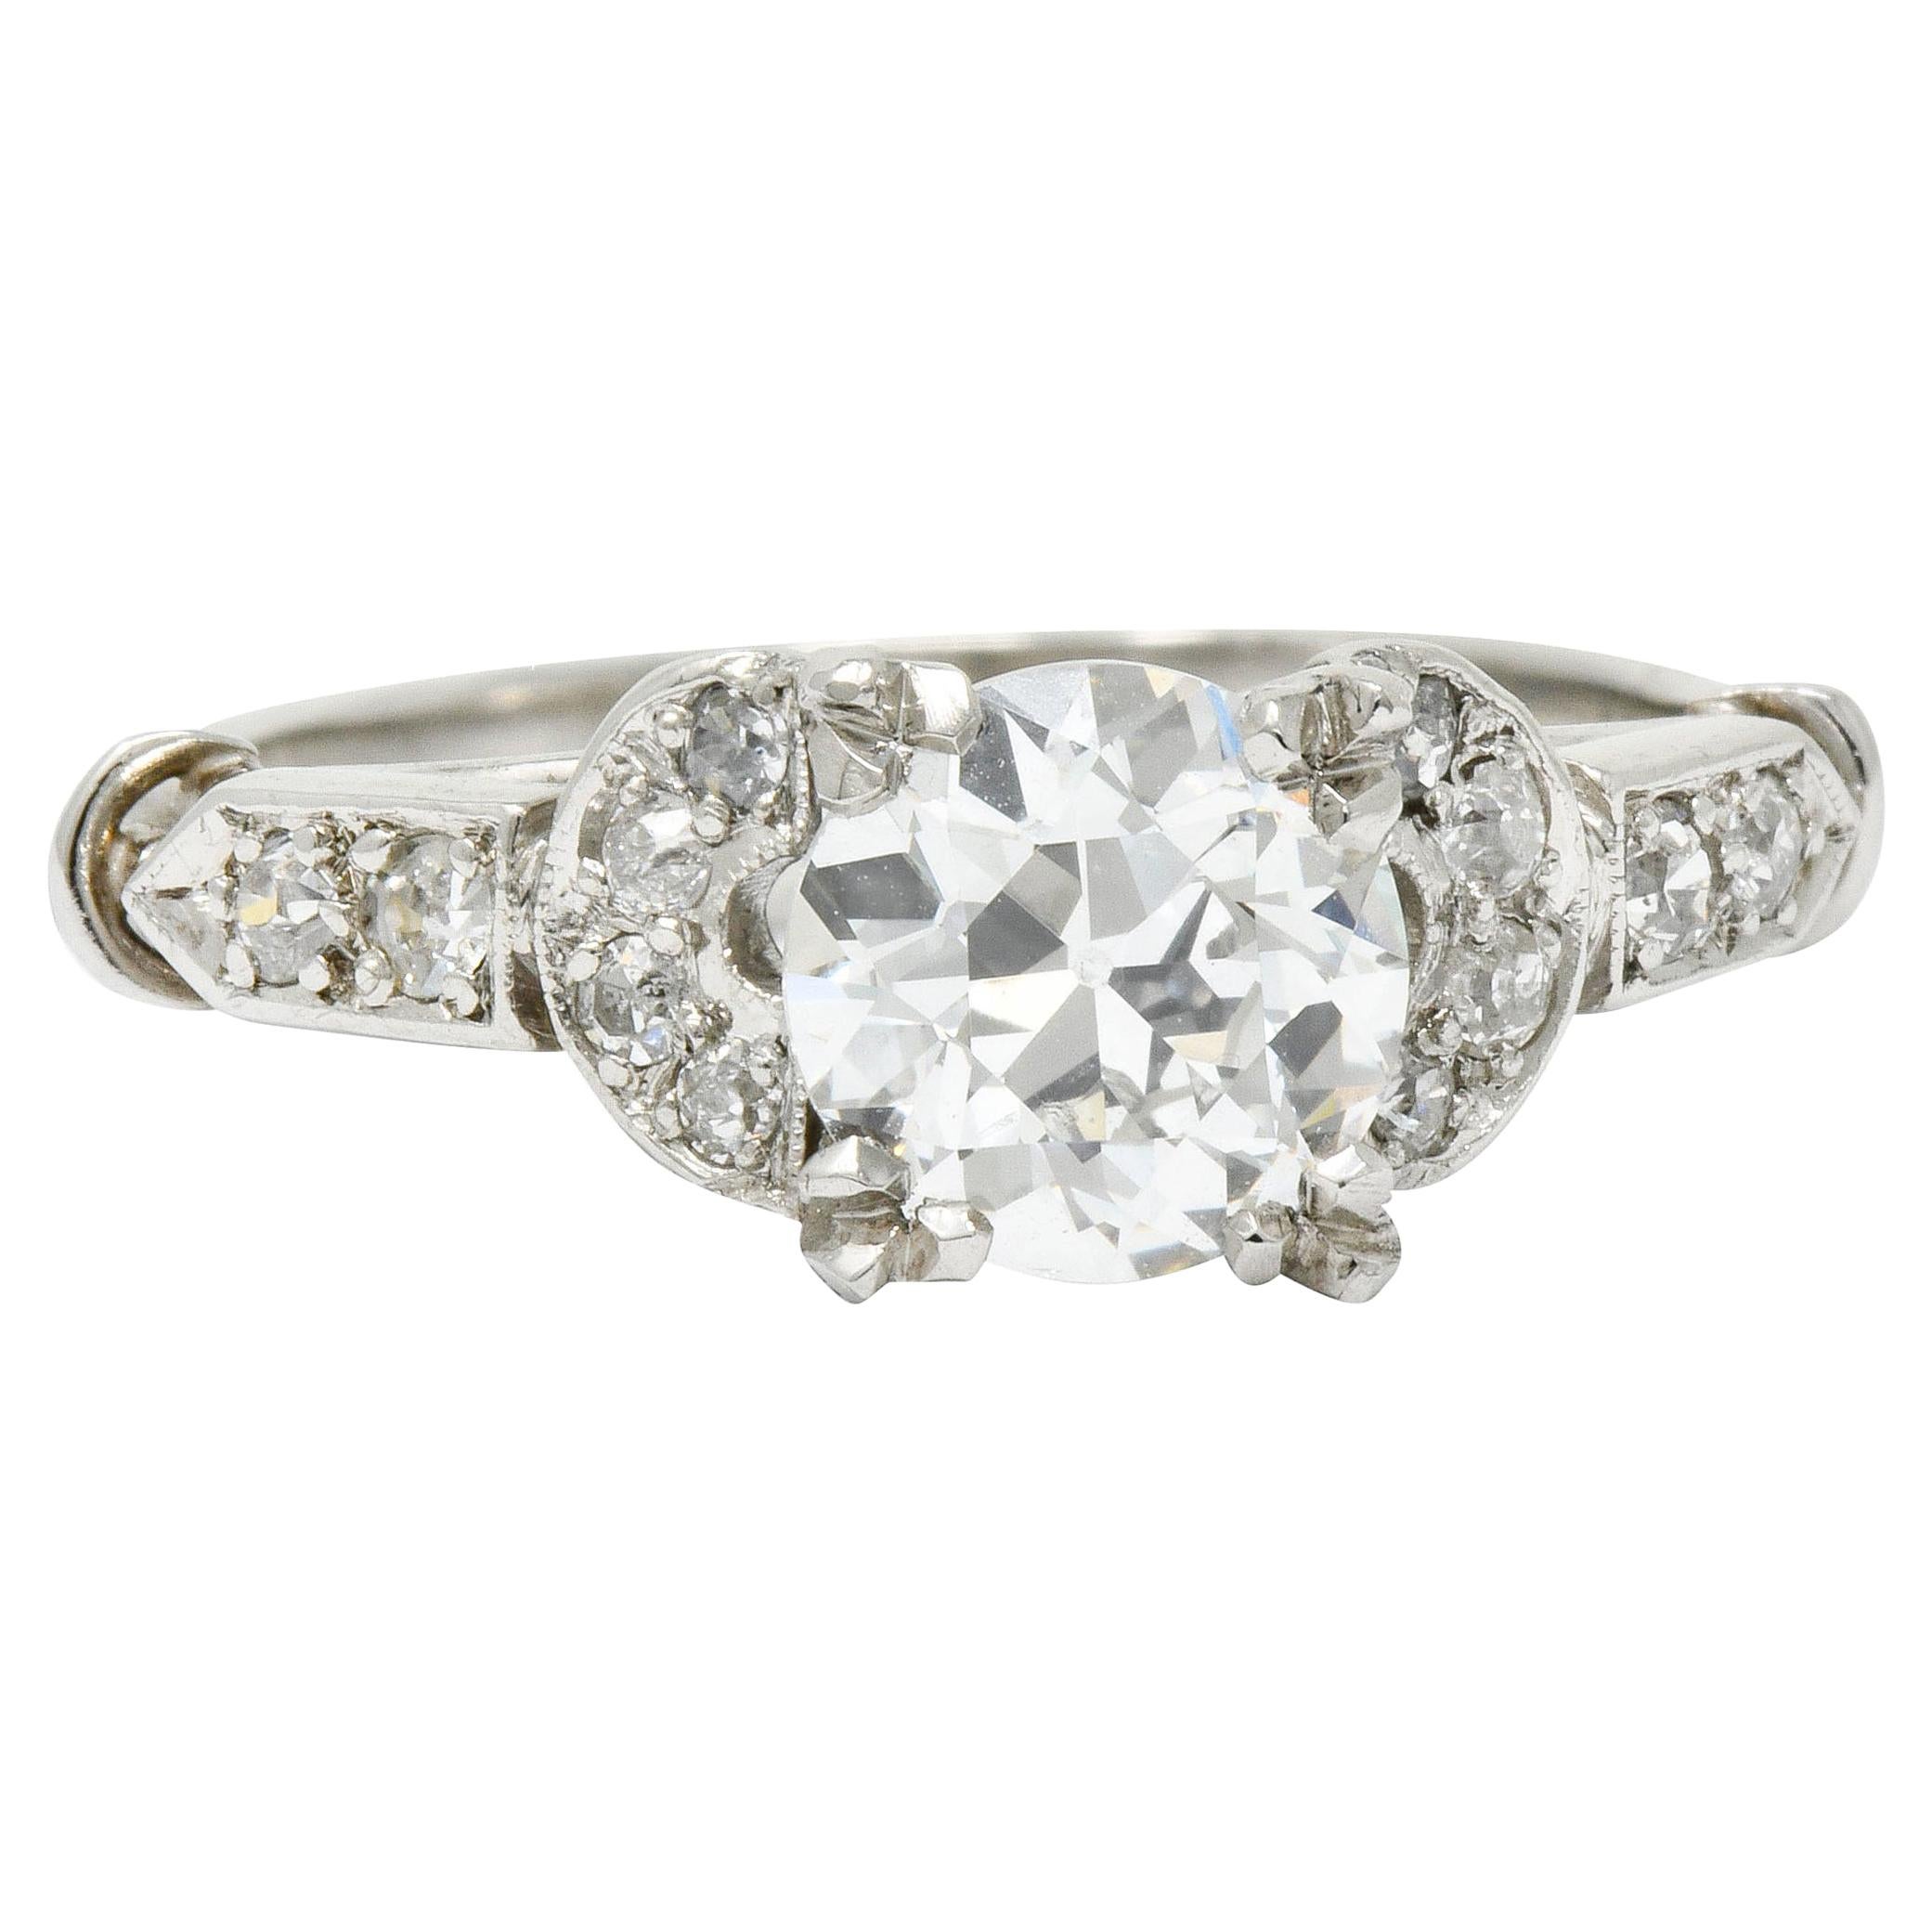 Exquisite Art Deco 1.39 Carats Diamond Platinum Engagement Ring GIA For Sale